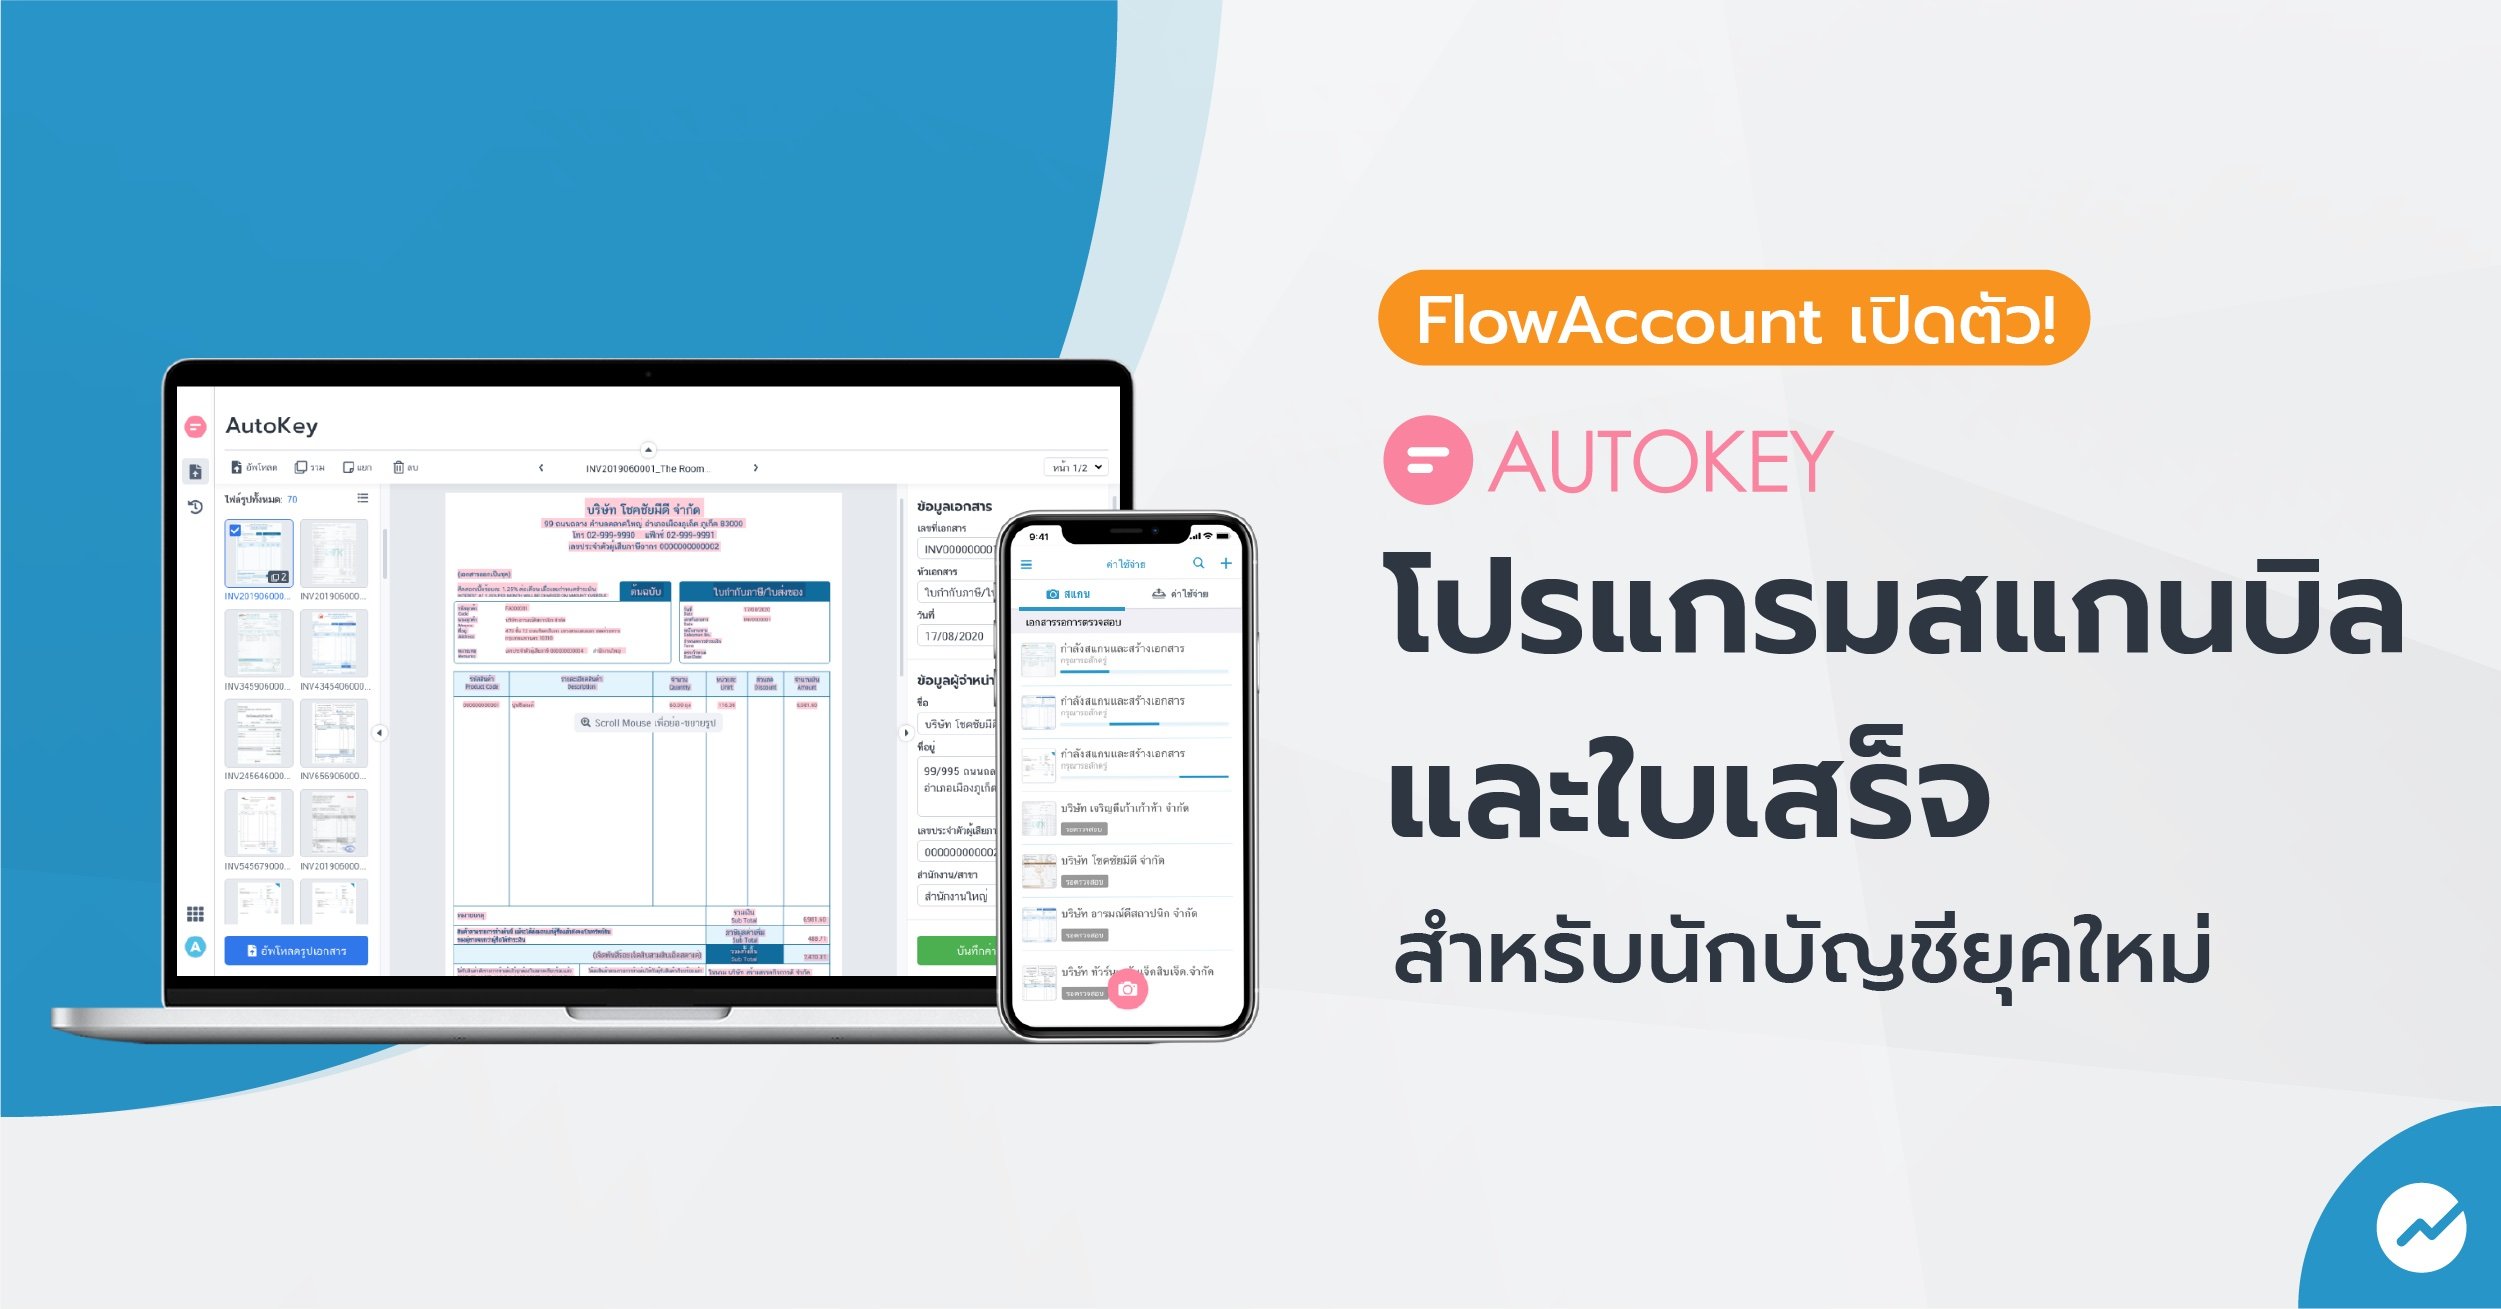 AutoKey for Startup Thailand